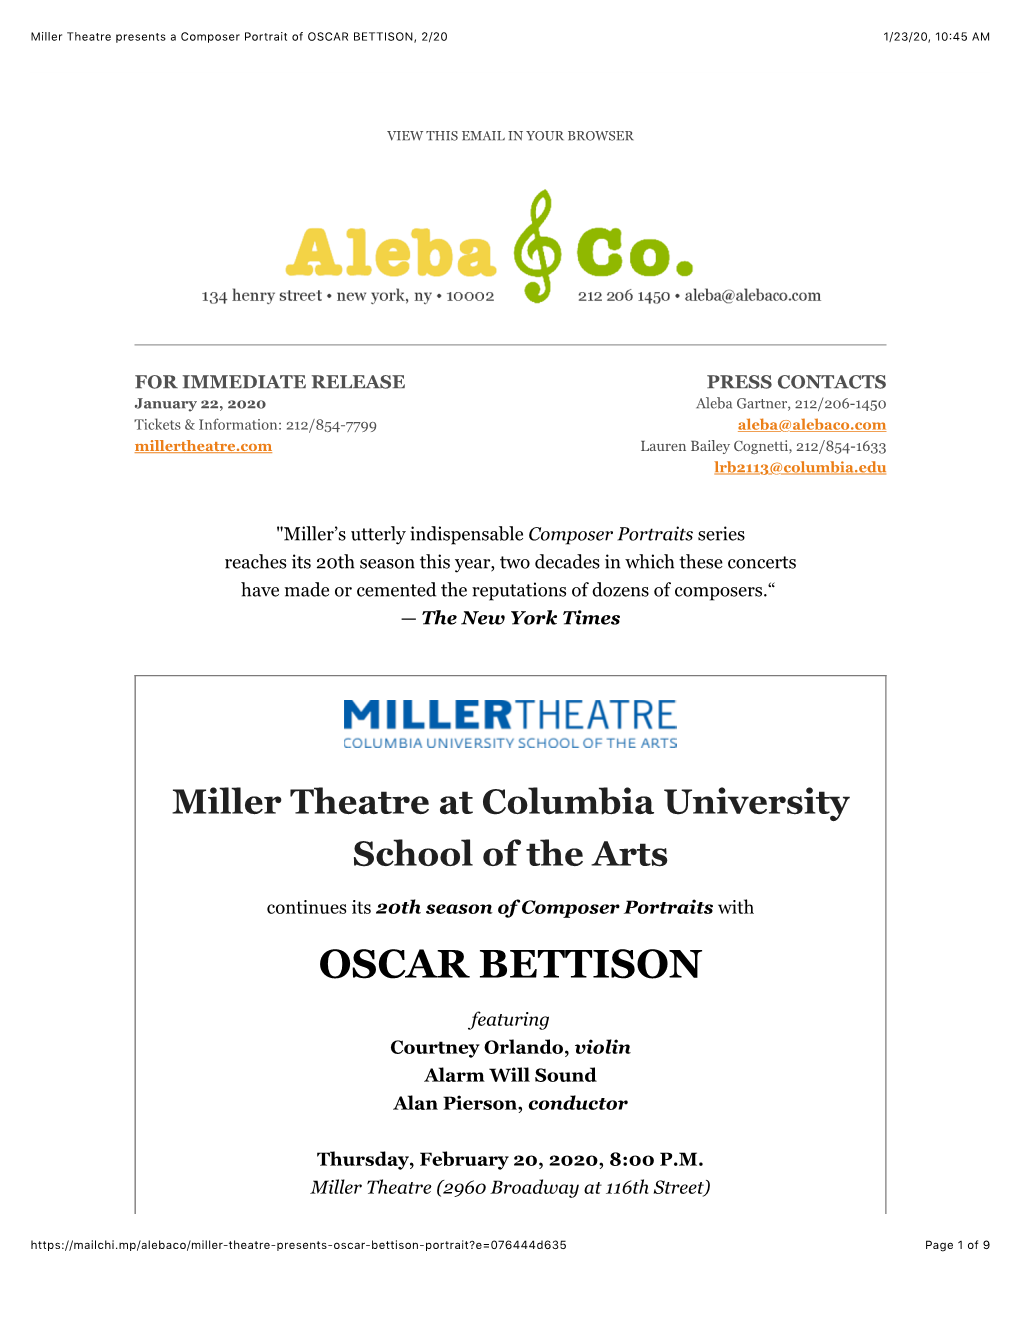 Miller Theatre Presents a Composer Portrait of OSCAR BETTISON, 2-20